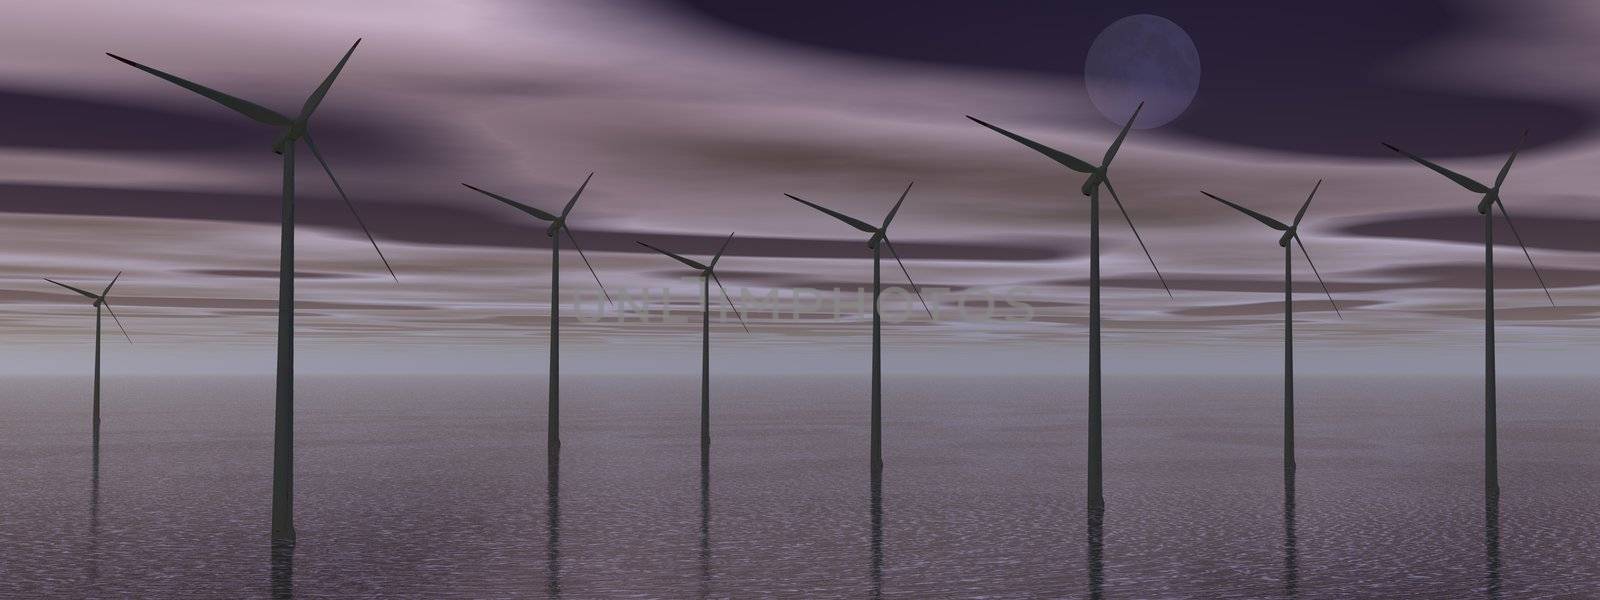 Wind turbines in the ocean by dark cloudy night